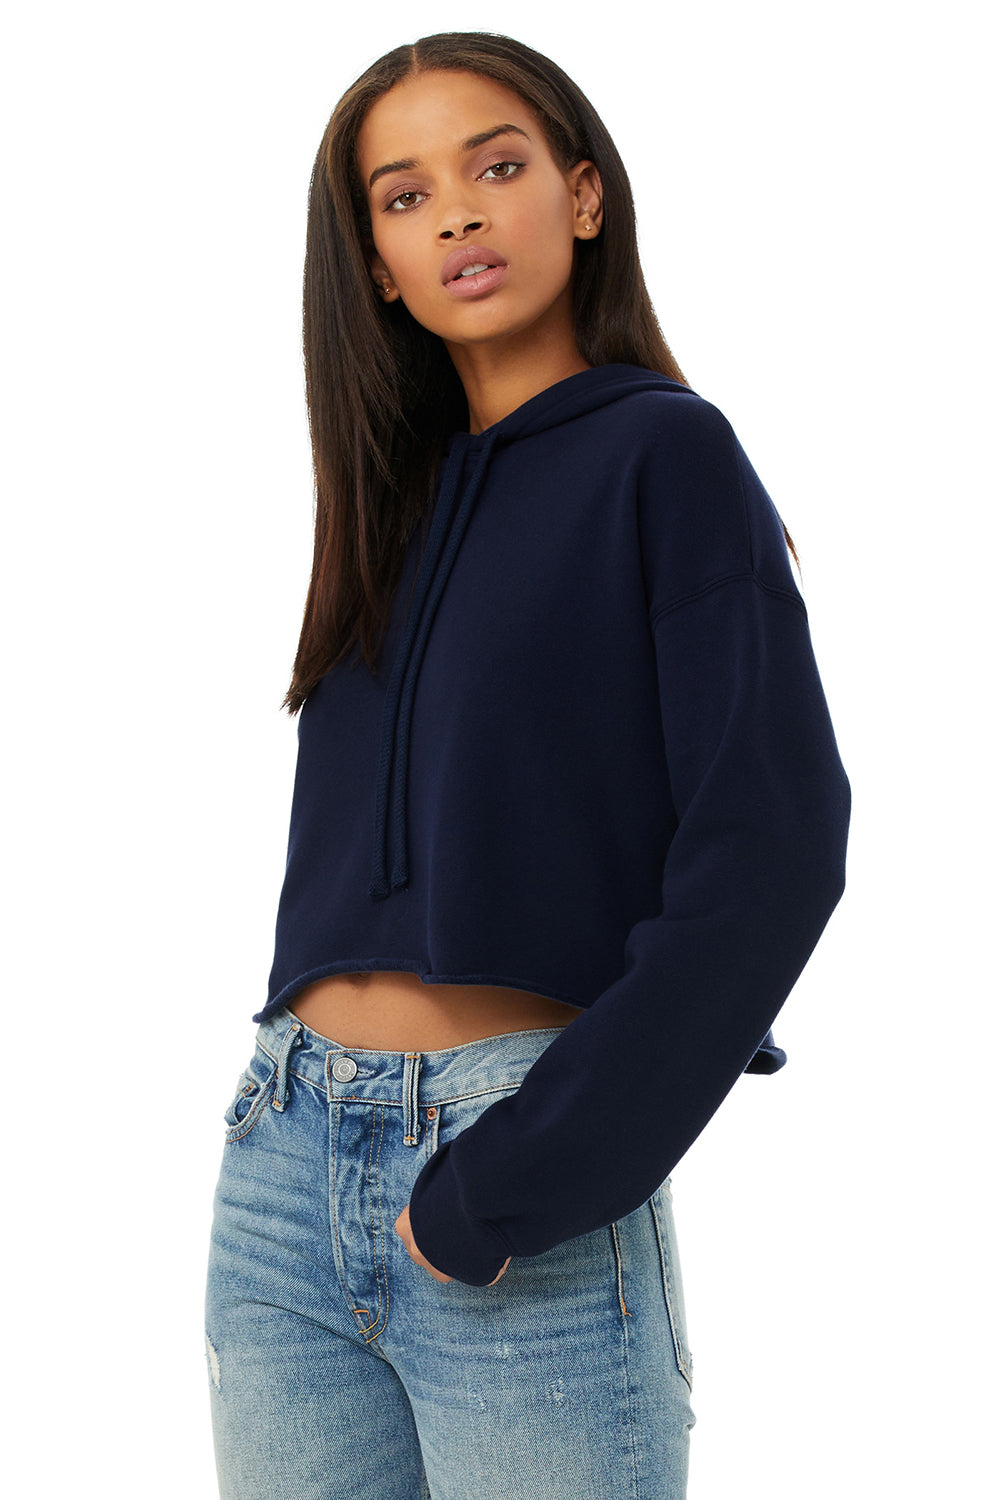 Bella + Canvas BC7502/B7502/7502 Womens Cropped Fleece Hooded Sweatshirt Hoodie Navy Blue Model 3Q